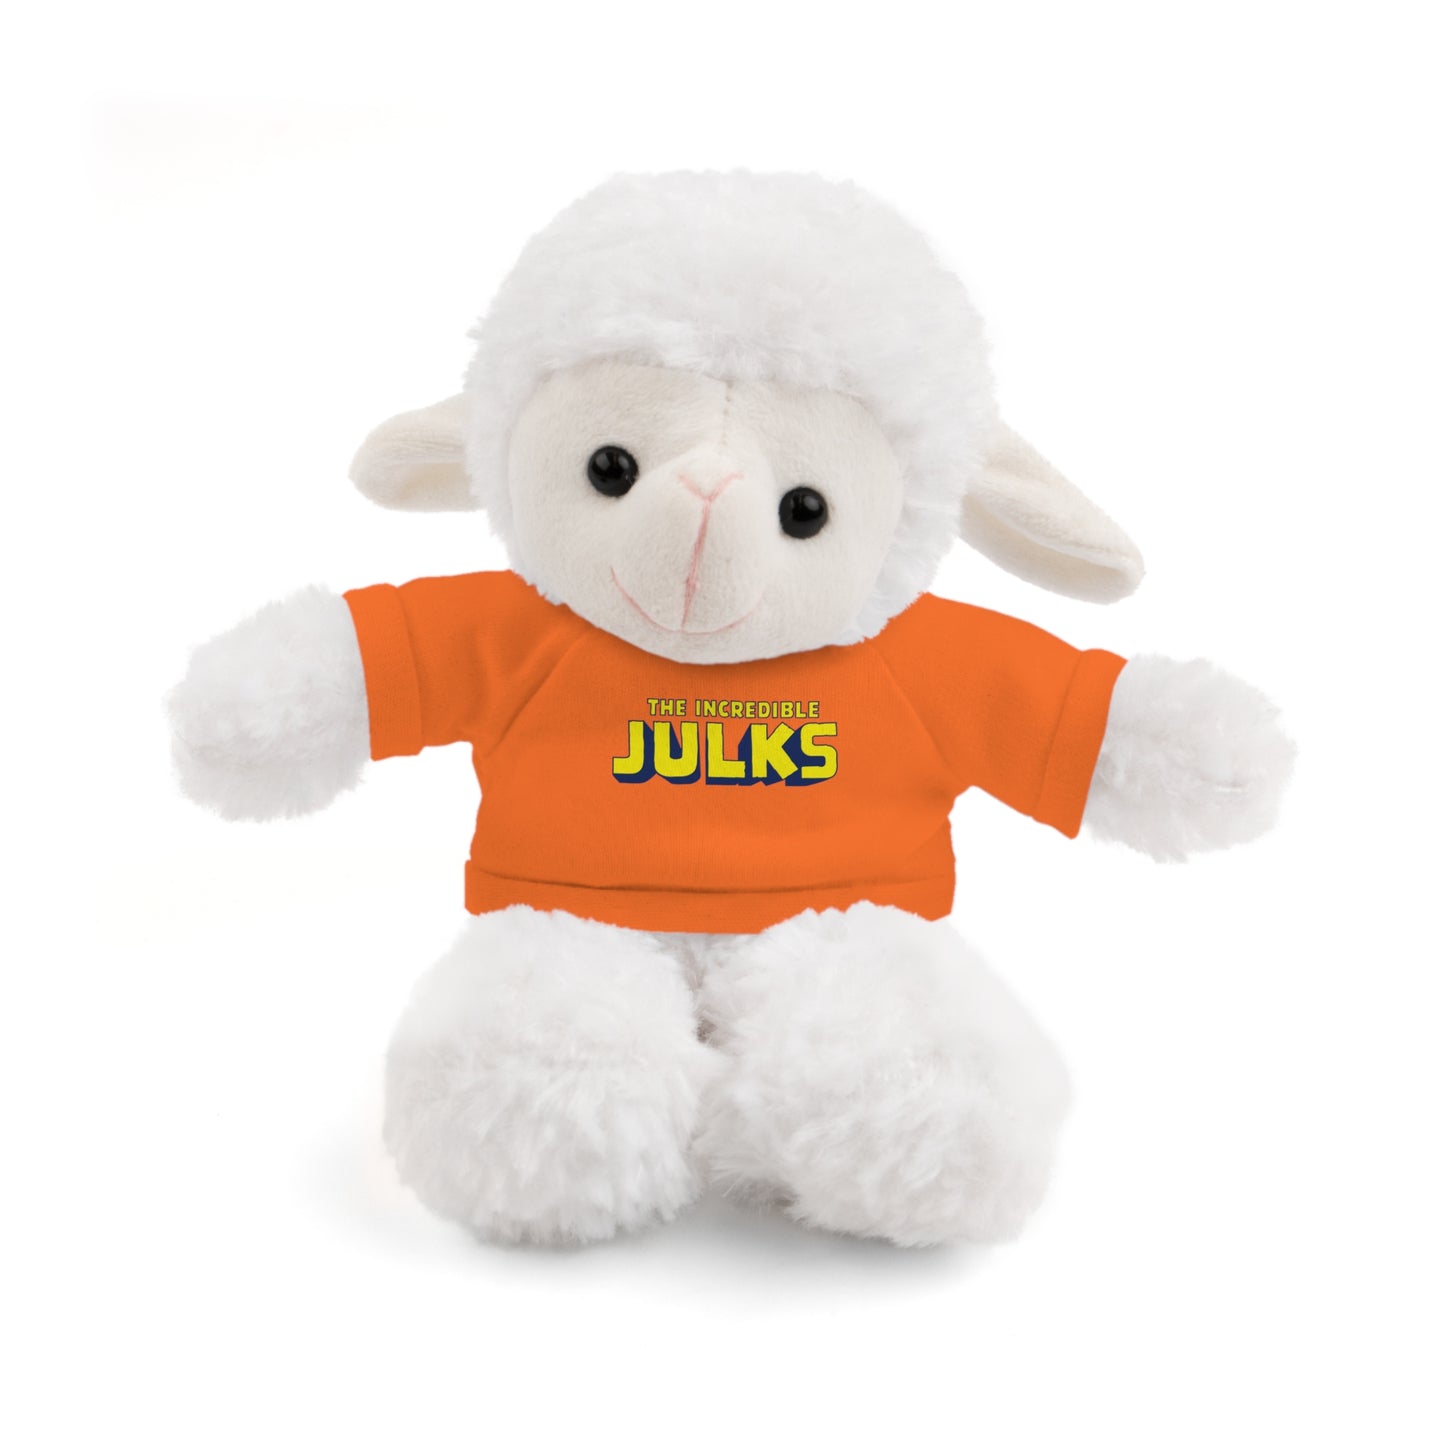 The Incredible Julks Stuffed Animal